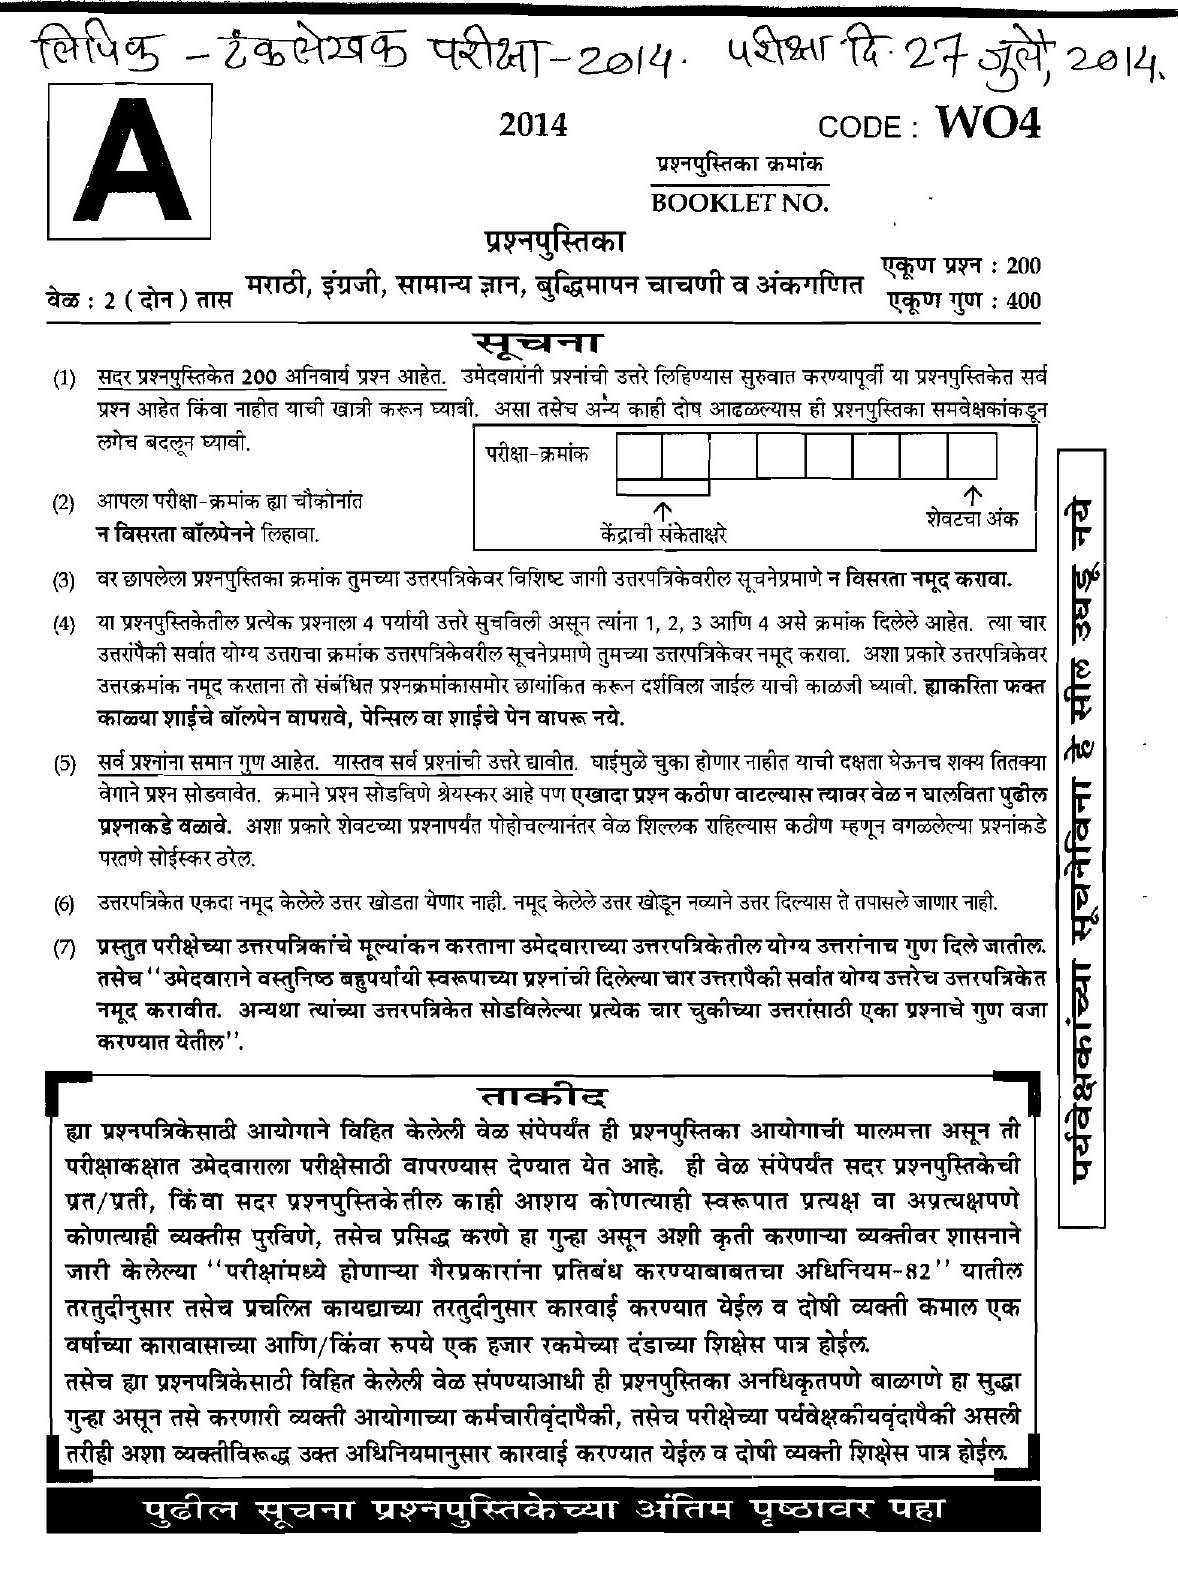 Maharashtra PSC Clerk Typist Exam Question Paper 2014 1